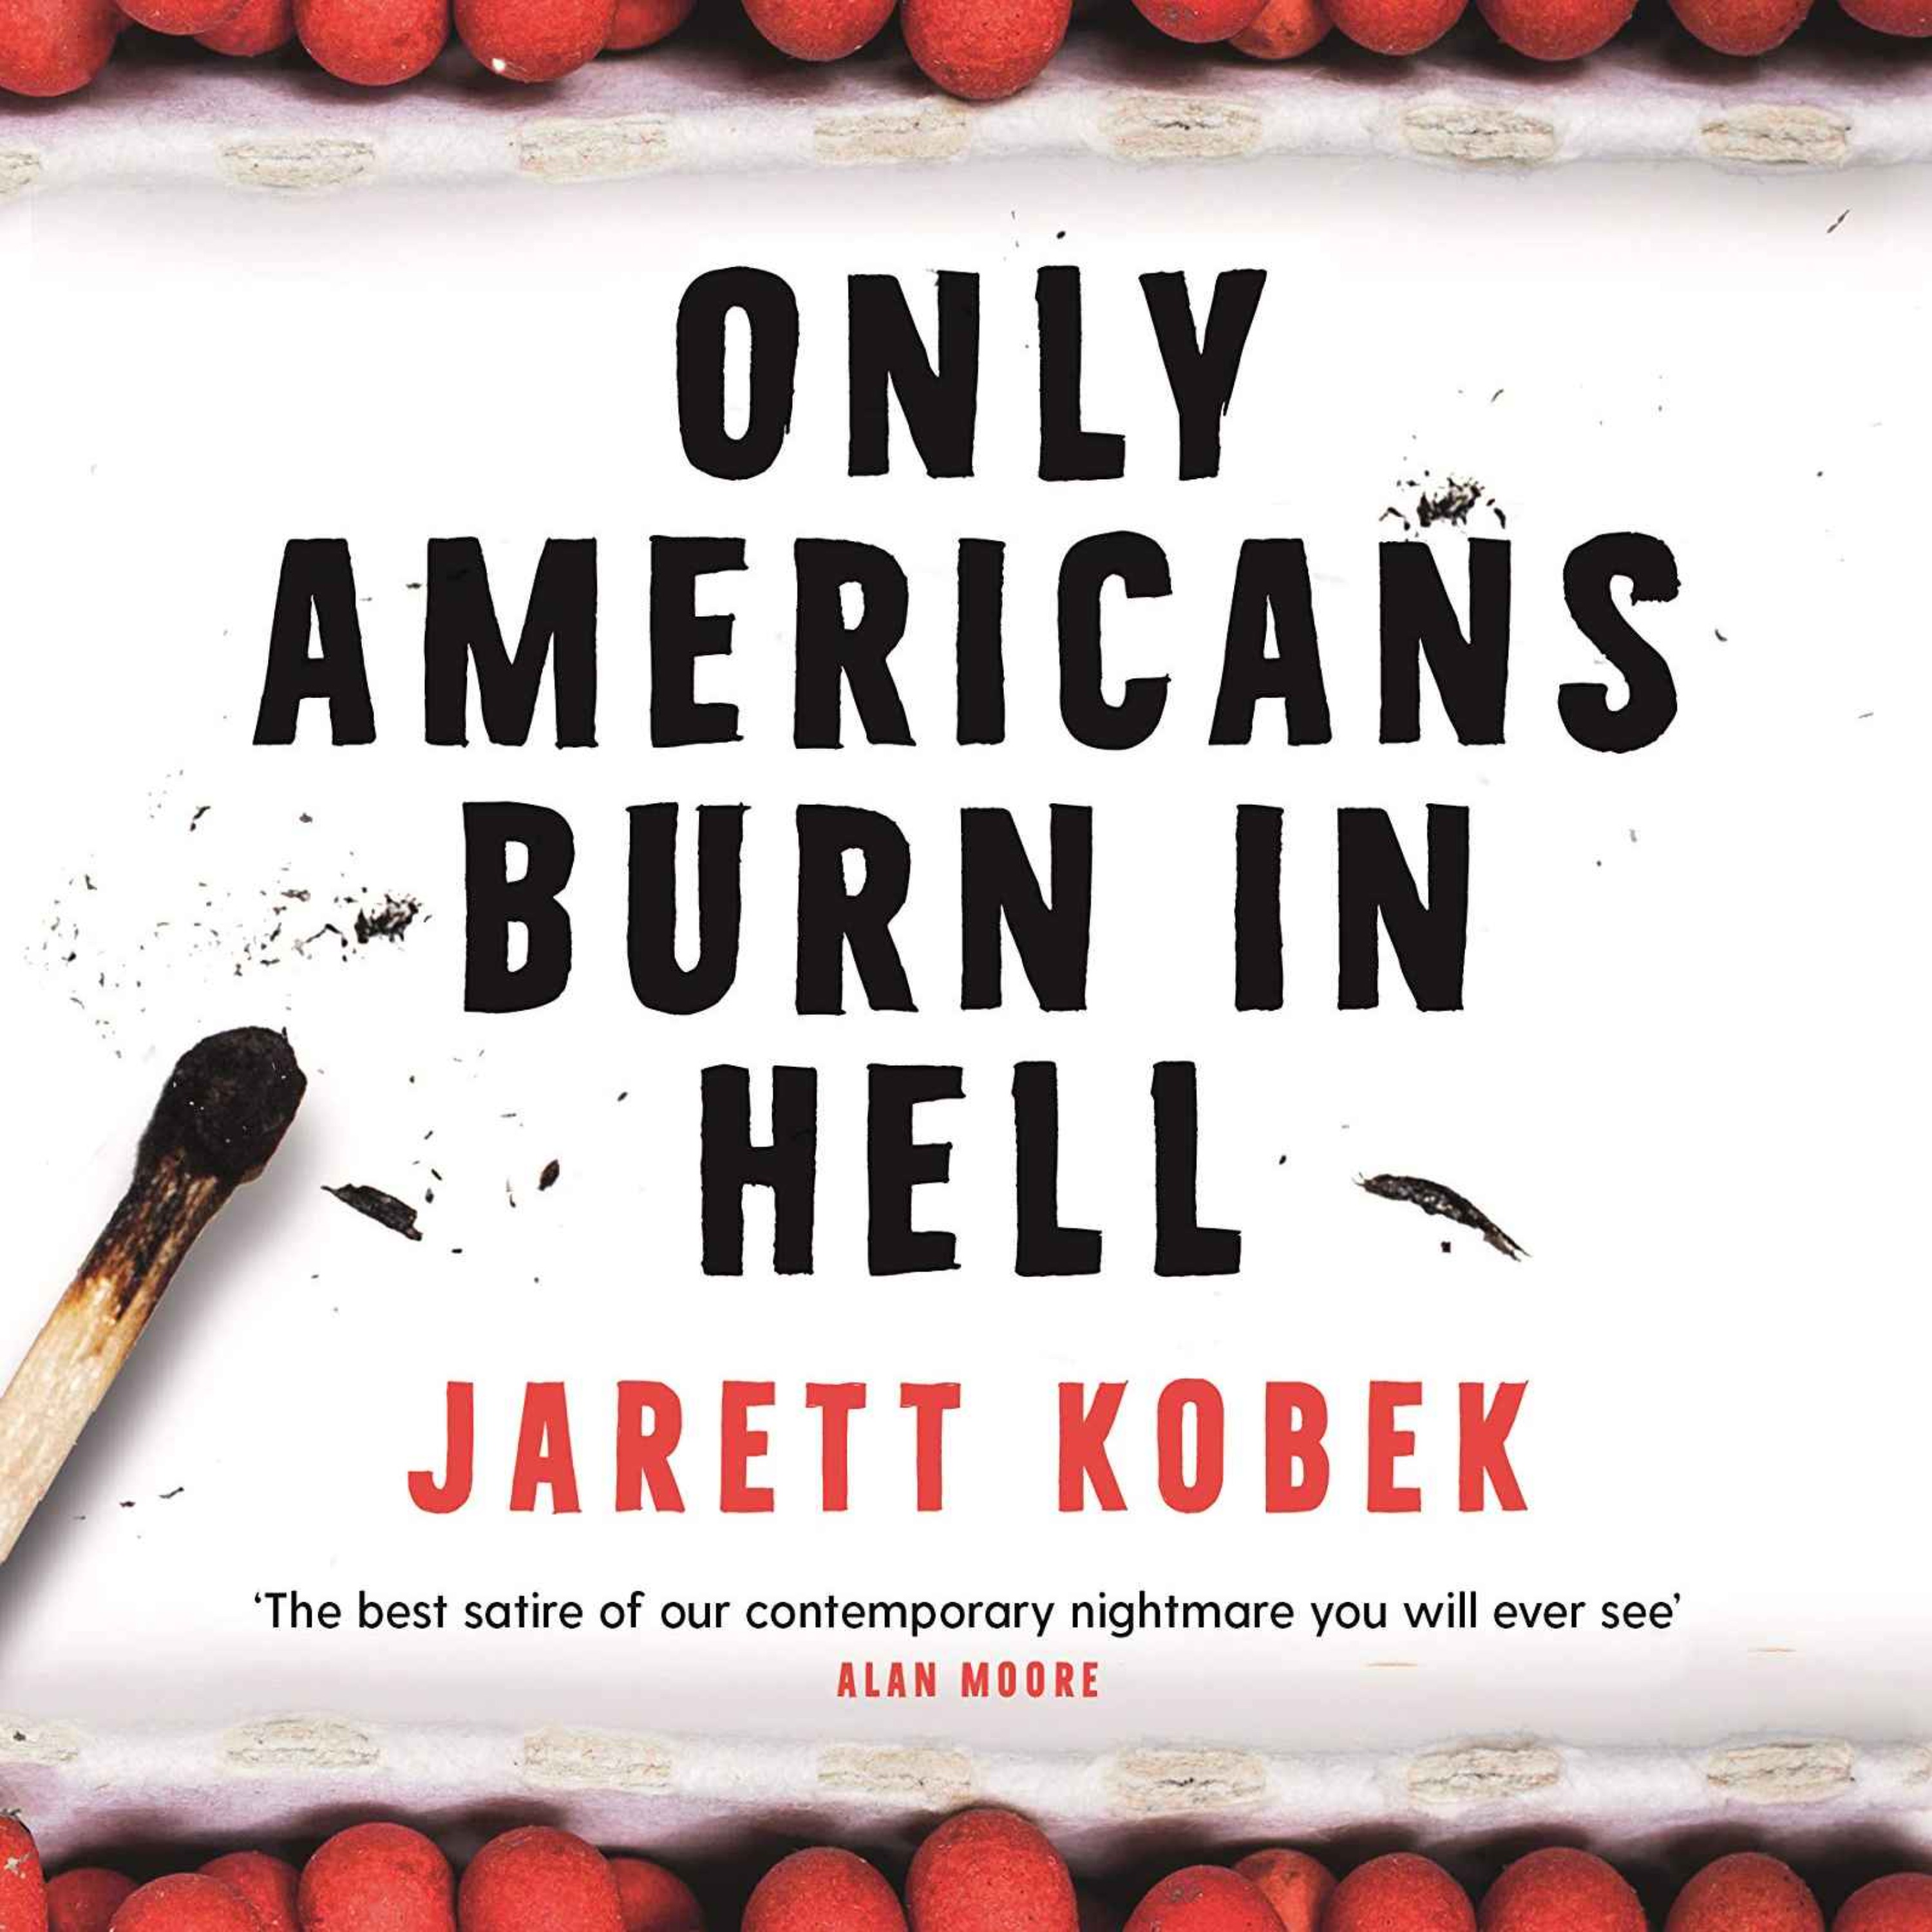 cover art for From The Archive -  Jarett Kobek's Only Americans Burn In Hell